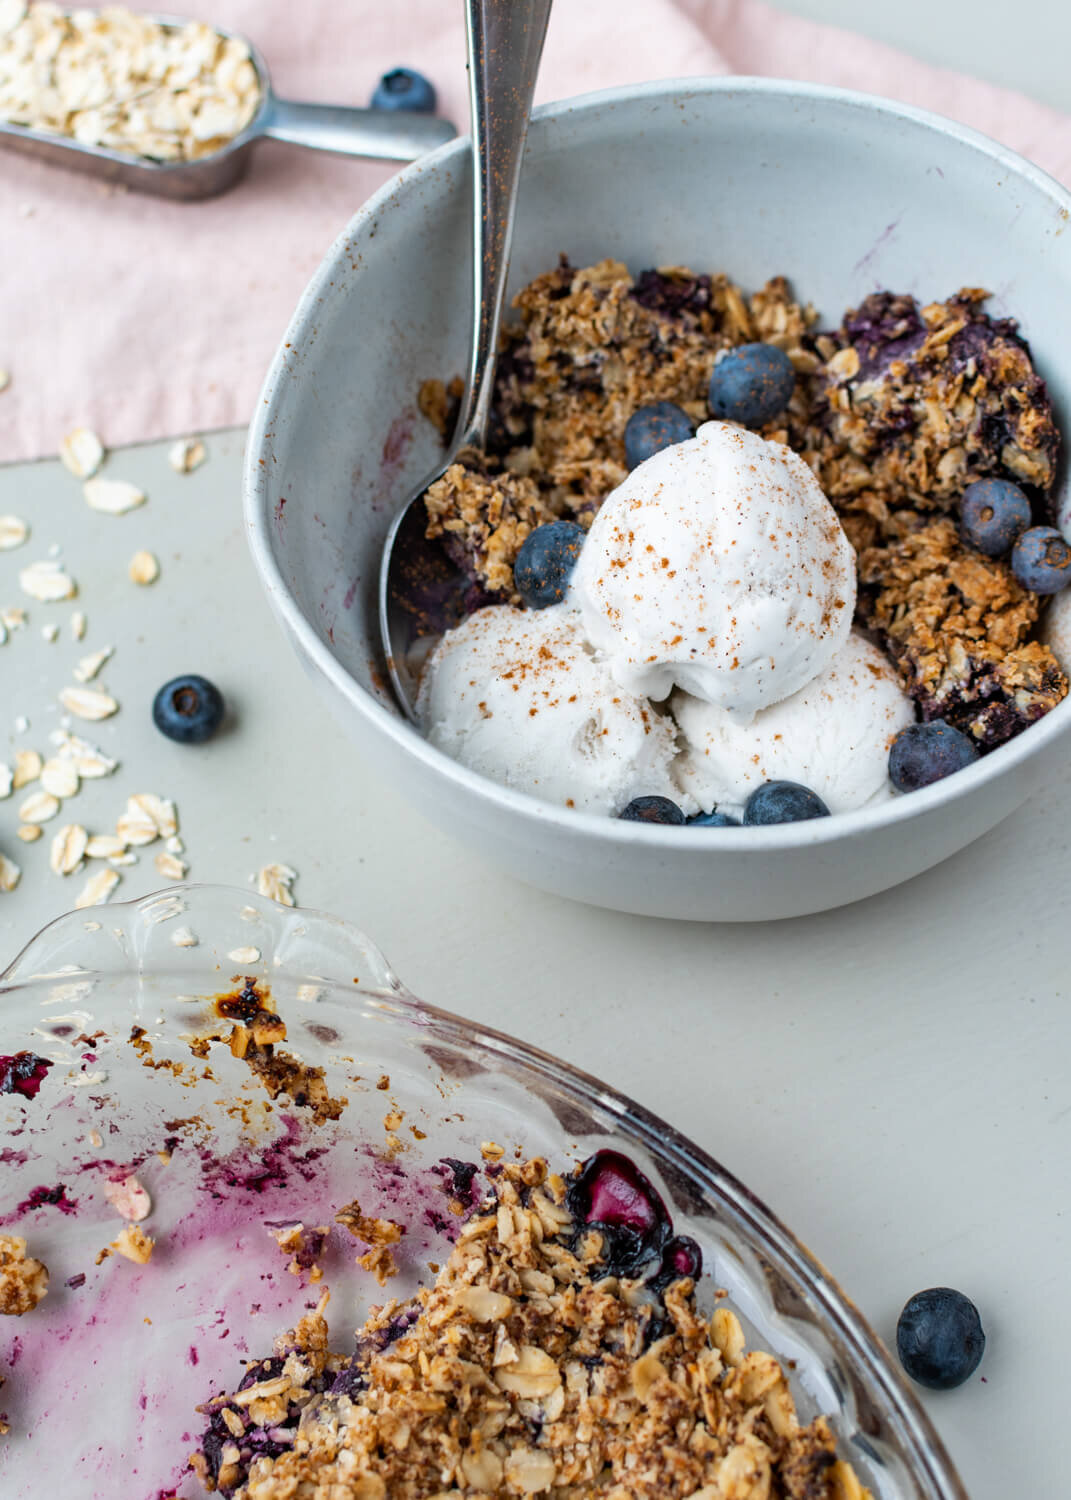 Vegan-Simple-Blueberry-Crisp-with-Ice-Cream-Dessert-Green-Eatalia-crvnka-Photography.JPG